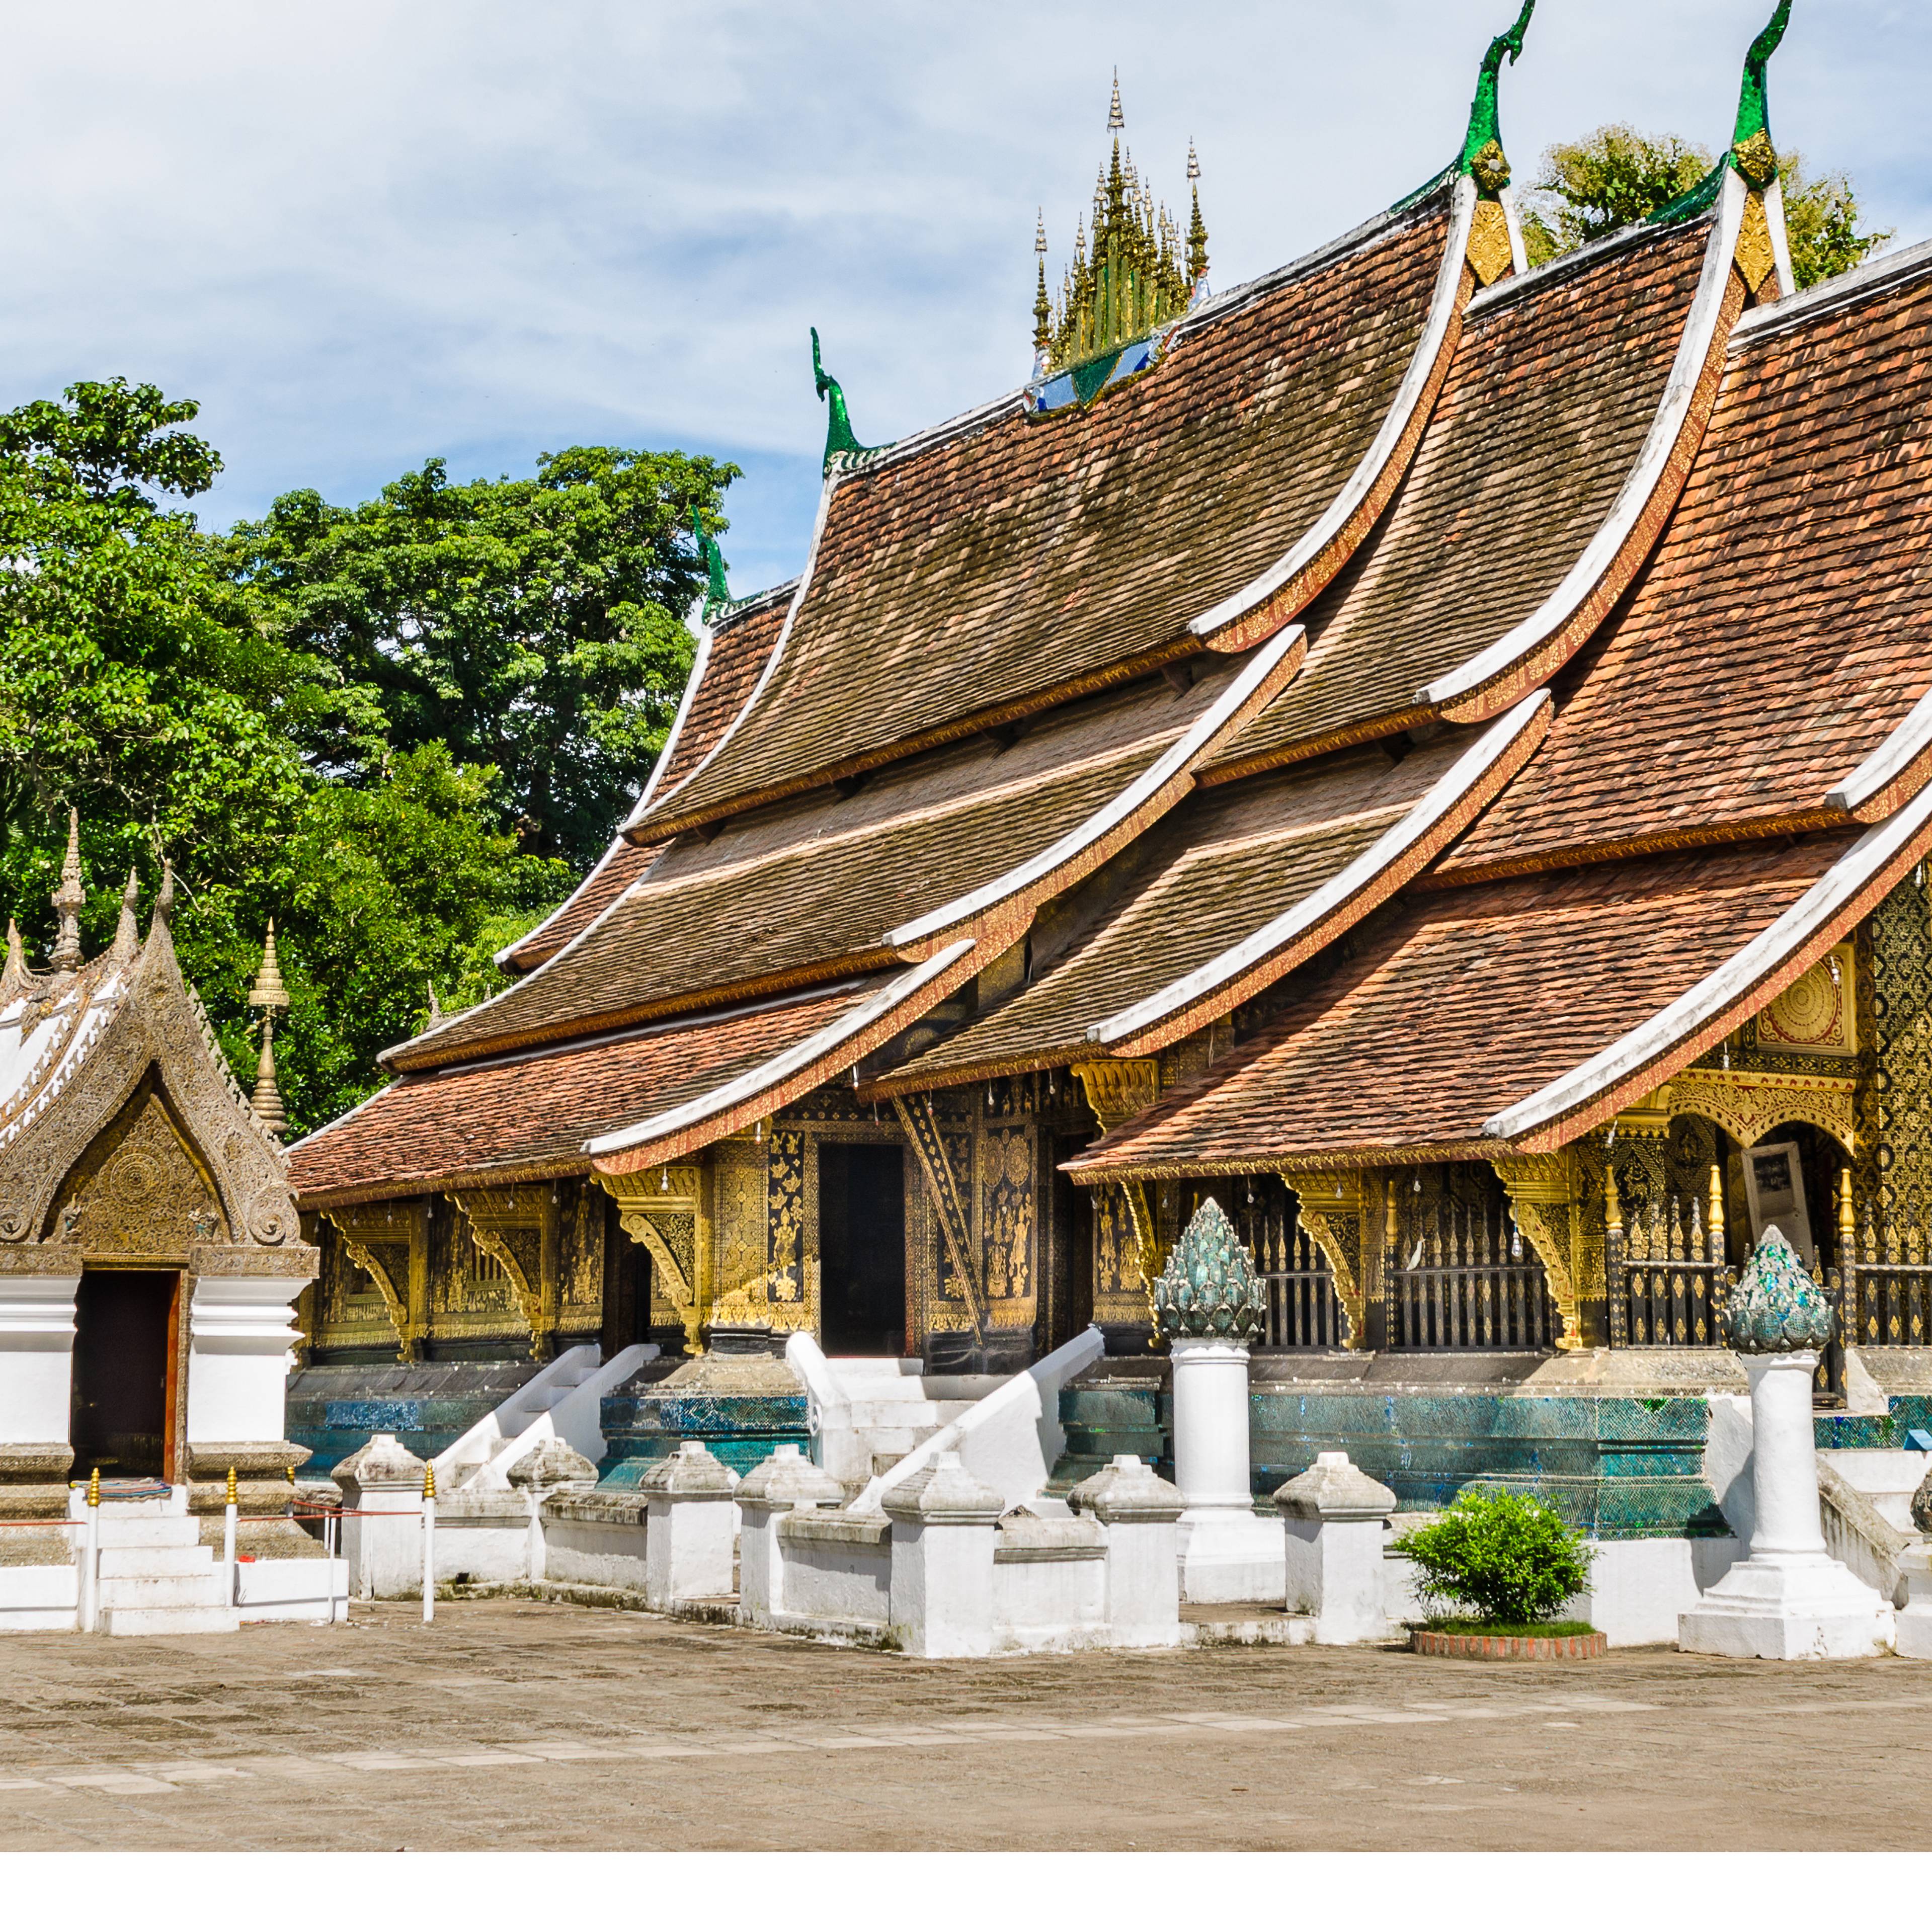 Städtereise Laos - Reise jetzt individuell gestalten